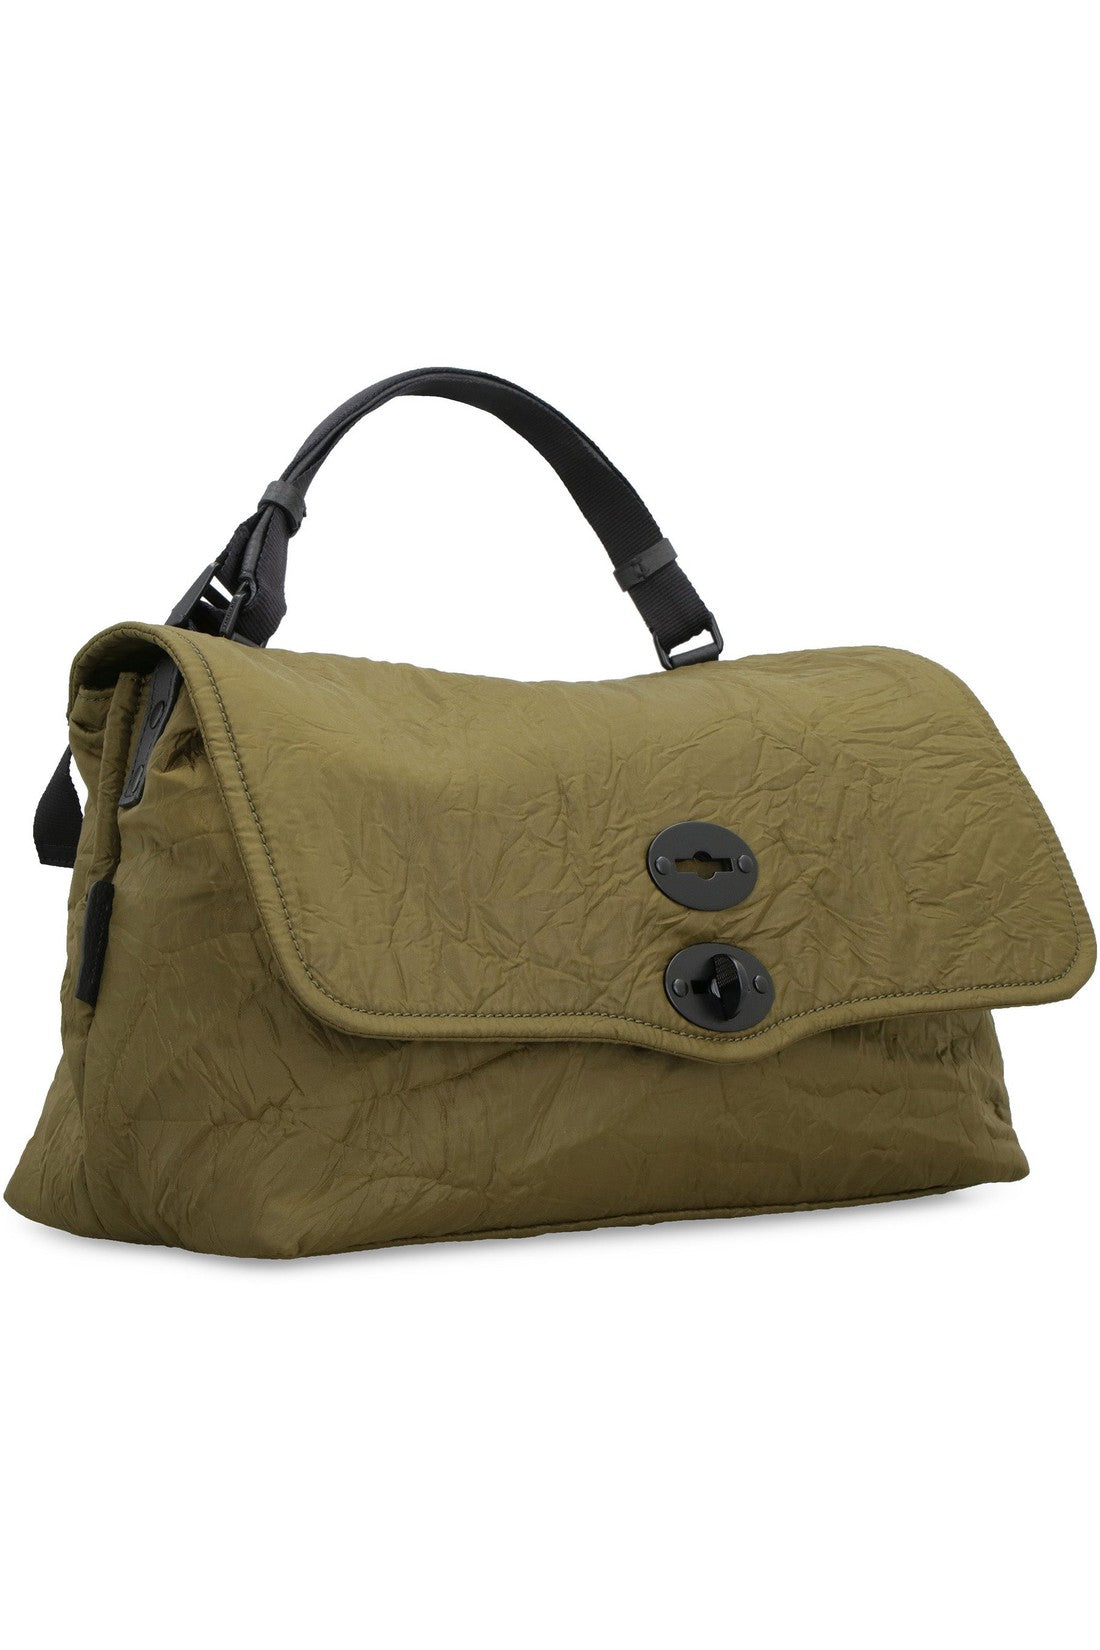 Zanellato-OUTLET-SALE-Postina M nylon handbag-ARCHIVIST